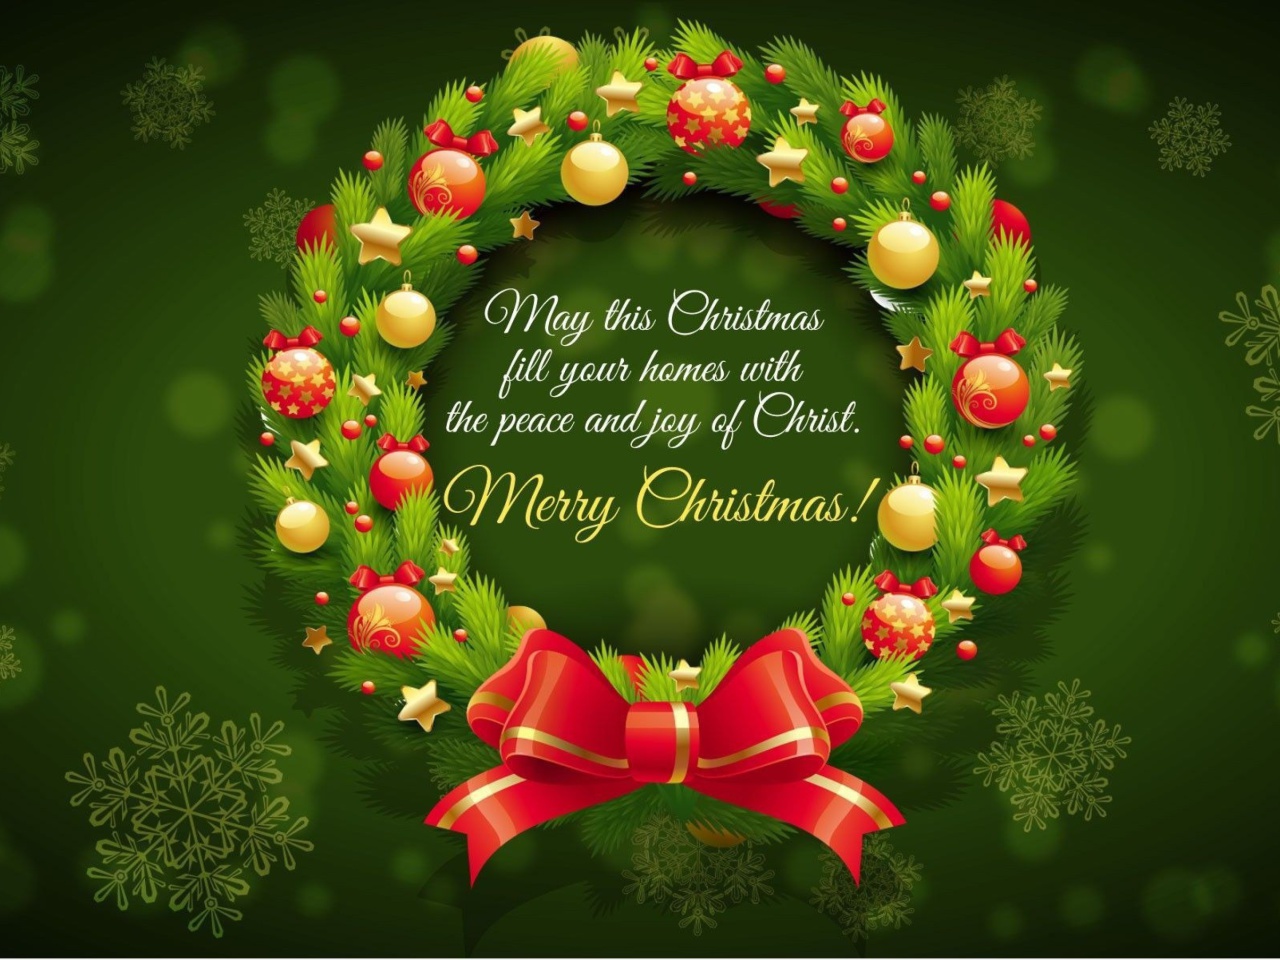 Merry Christmas 25 December SMS Wish wallpaper 1280x960